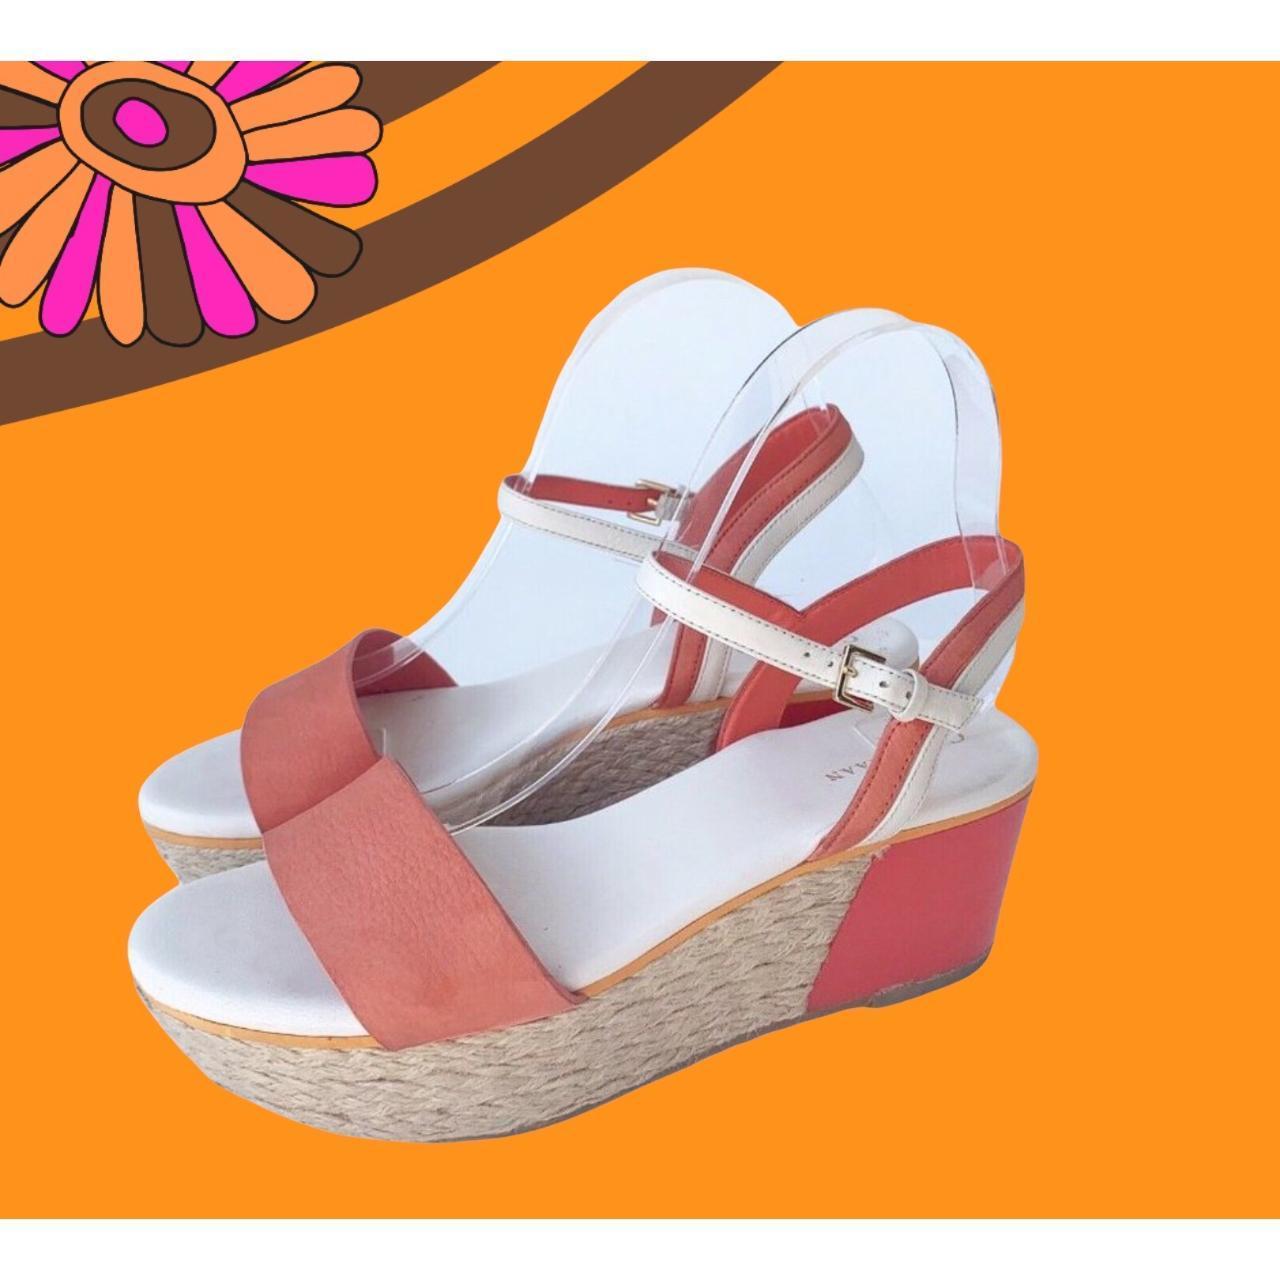 Product Image 1 - Retro Vibe Fun Summer Sandal